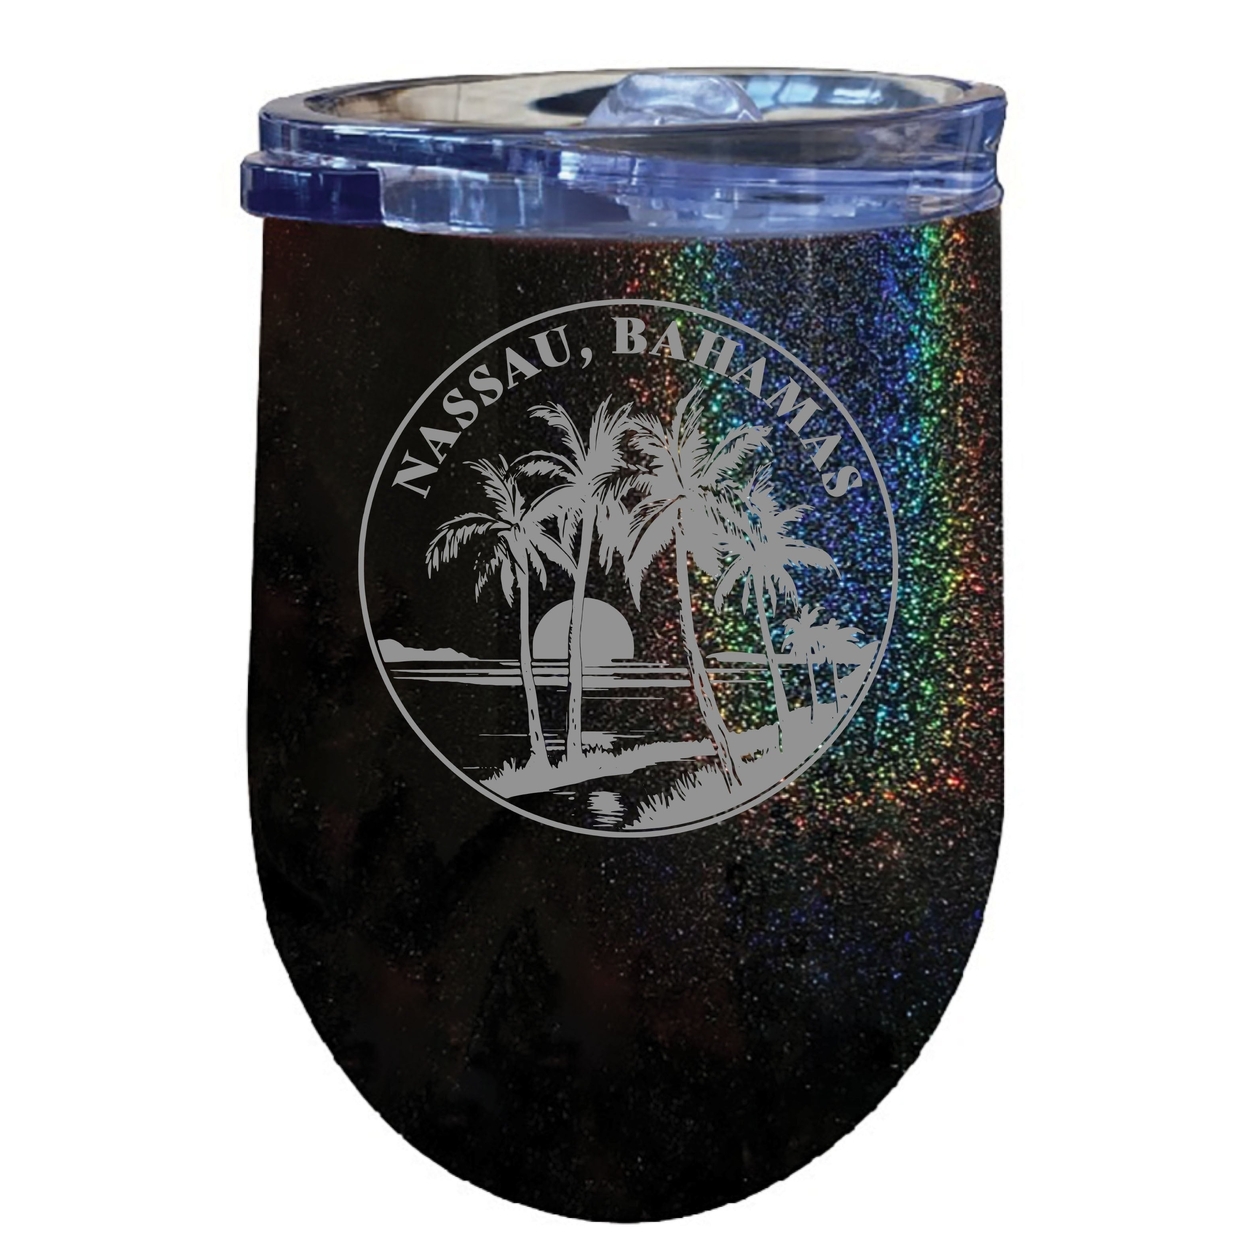 Nassau The Bahamas Souvenir 12 Oz Engraved Insulated Wine Stainless Steel Tumbler - Rainbow Glitter Gray,,2-Pack